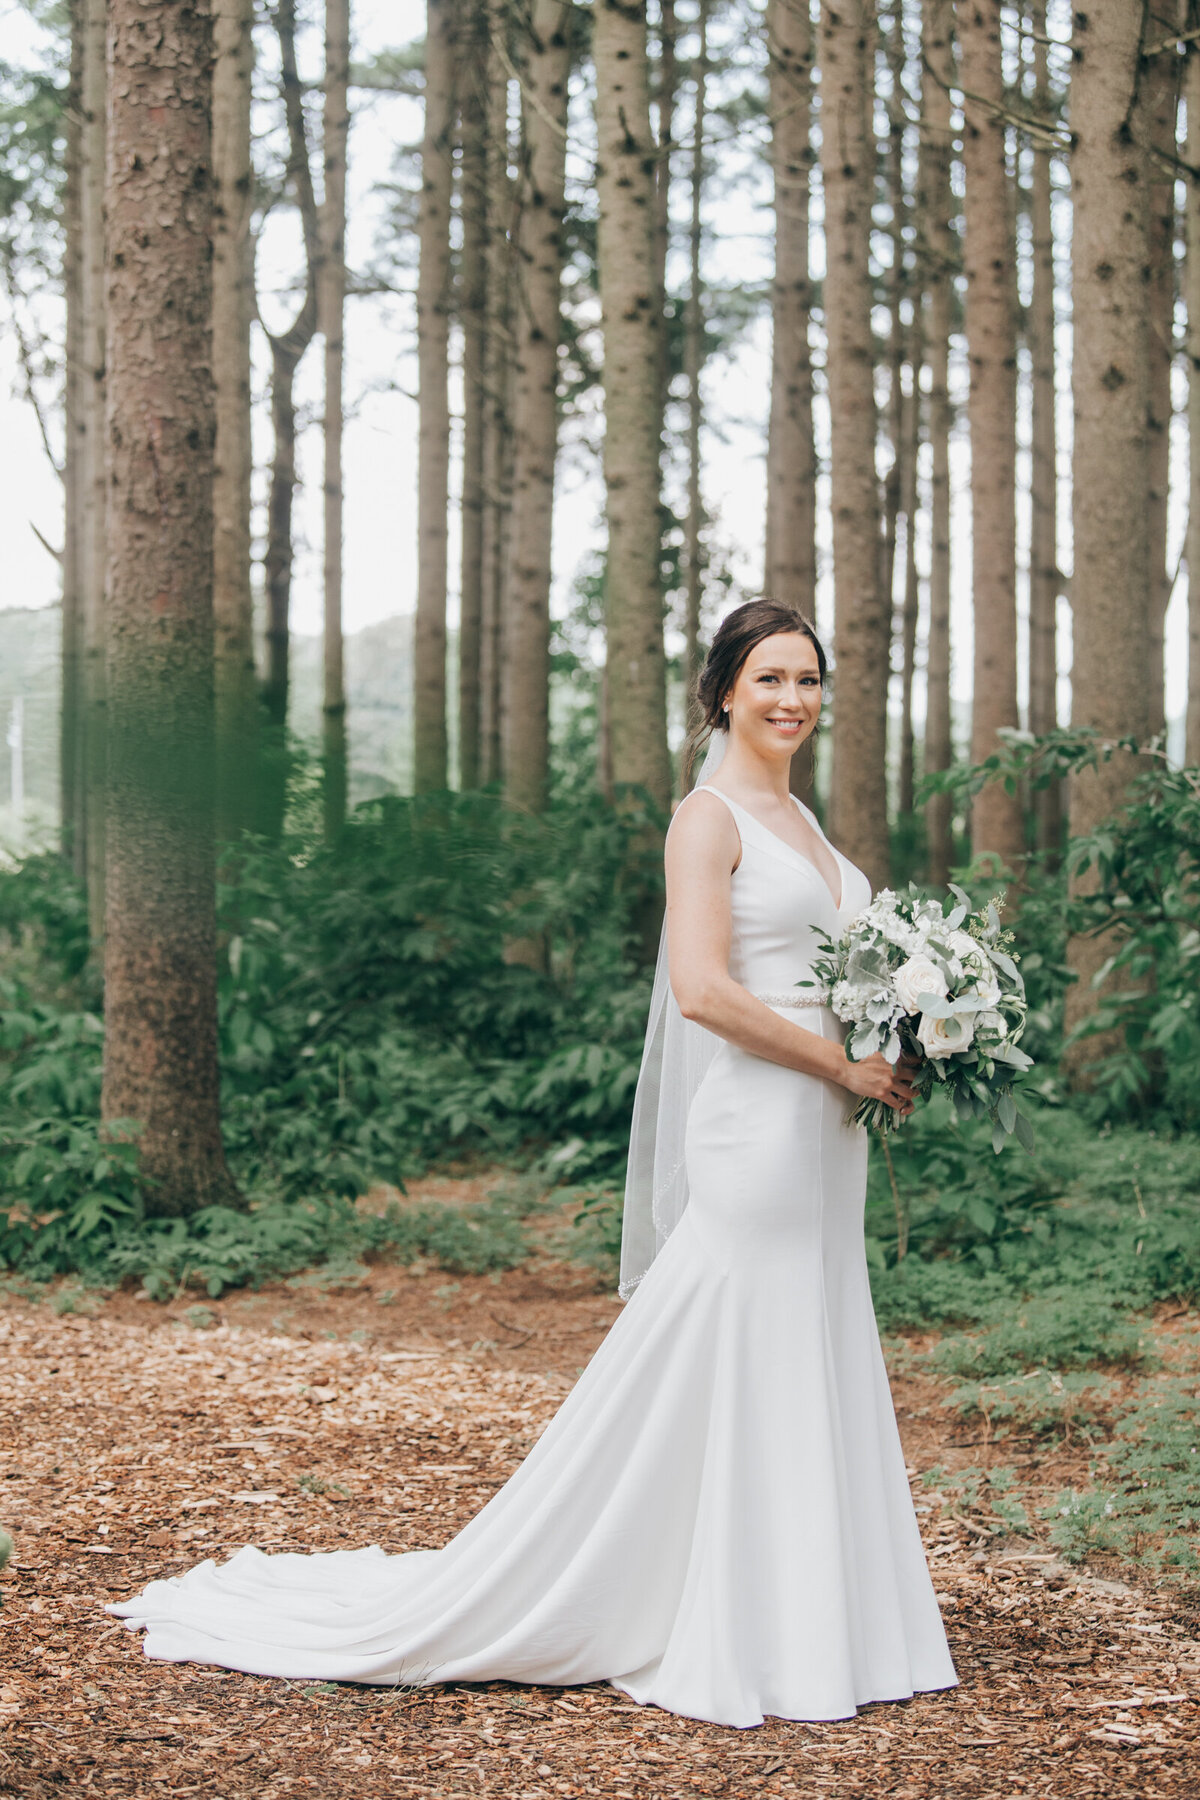 An elegant bride in a sleek white wedding dress holding a big, beautiful wedding bouquet